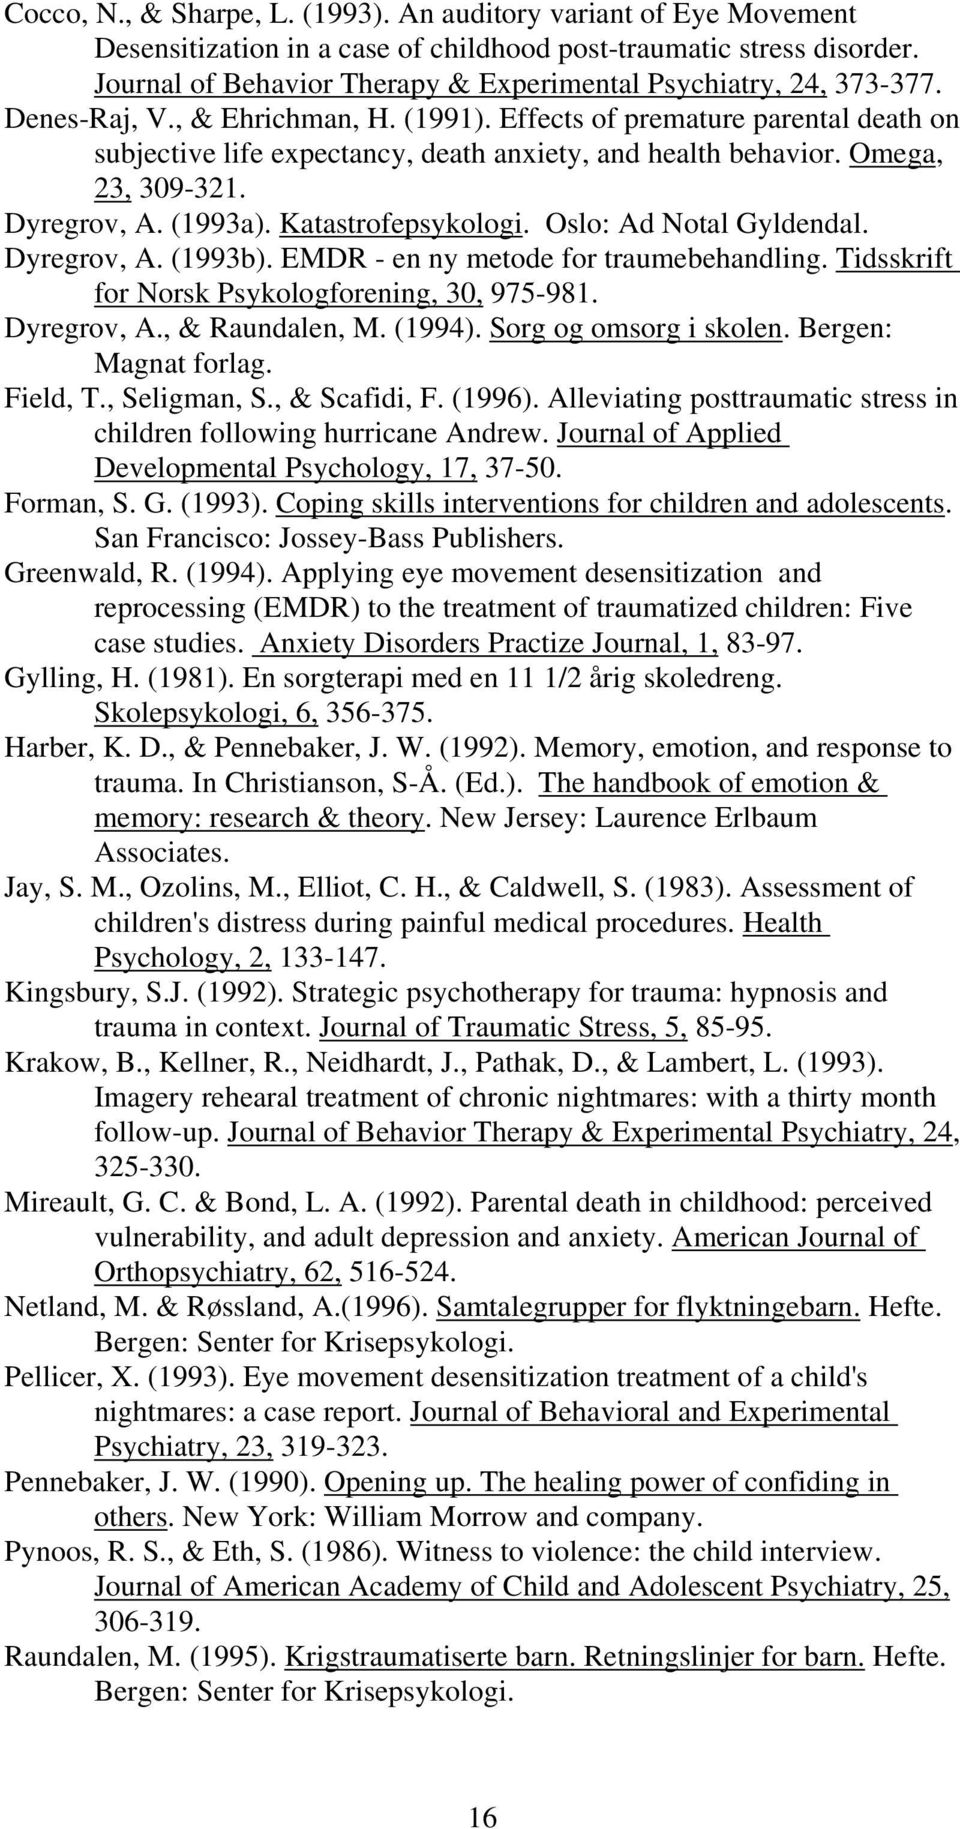 Effects of premature parental death on subjective life expectancy, death anxiety, and health behavior. Omega, 23, 309-321. Dyregrov, A. (1993a). Katastrofepsykologi. Oslo: Ad Notal Gyldendal.